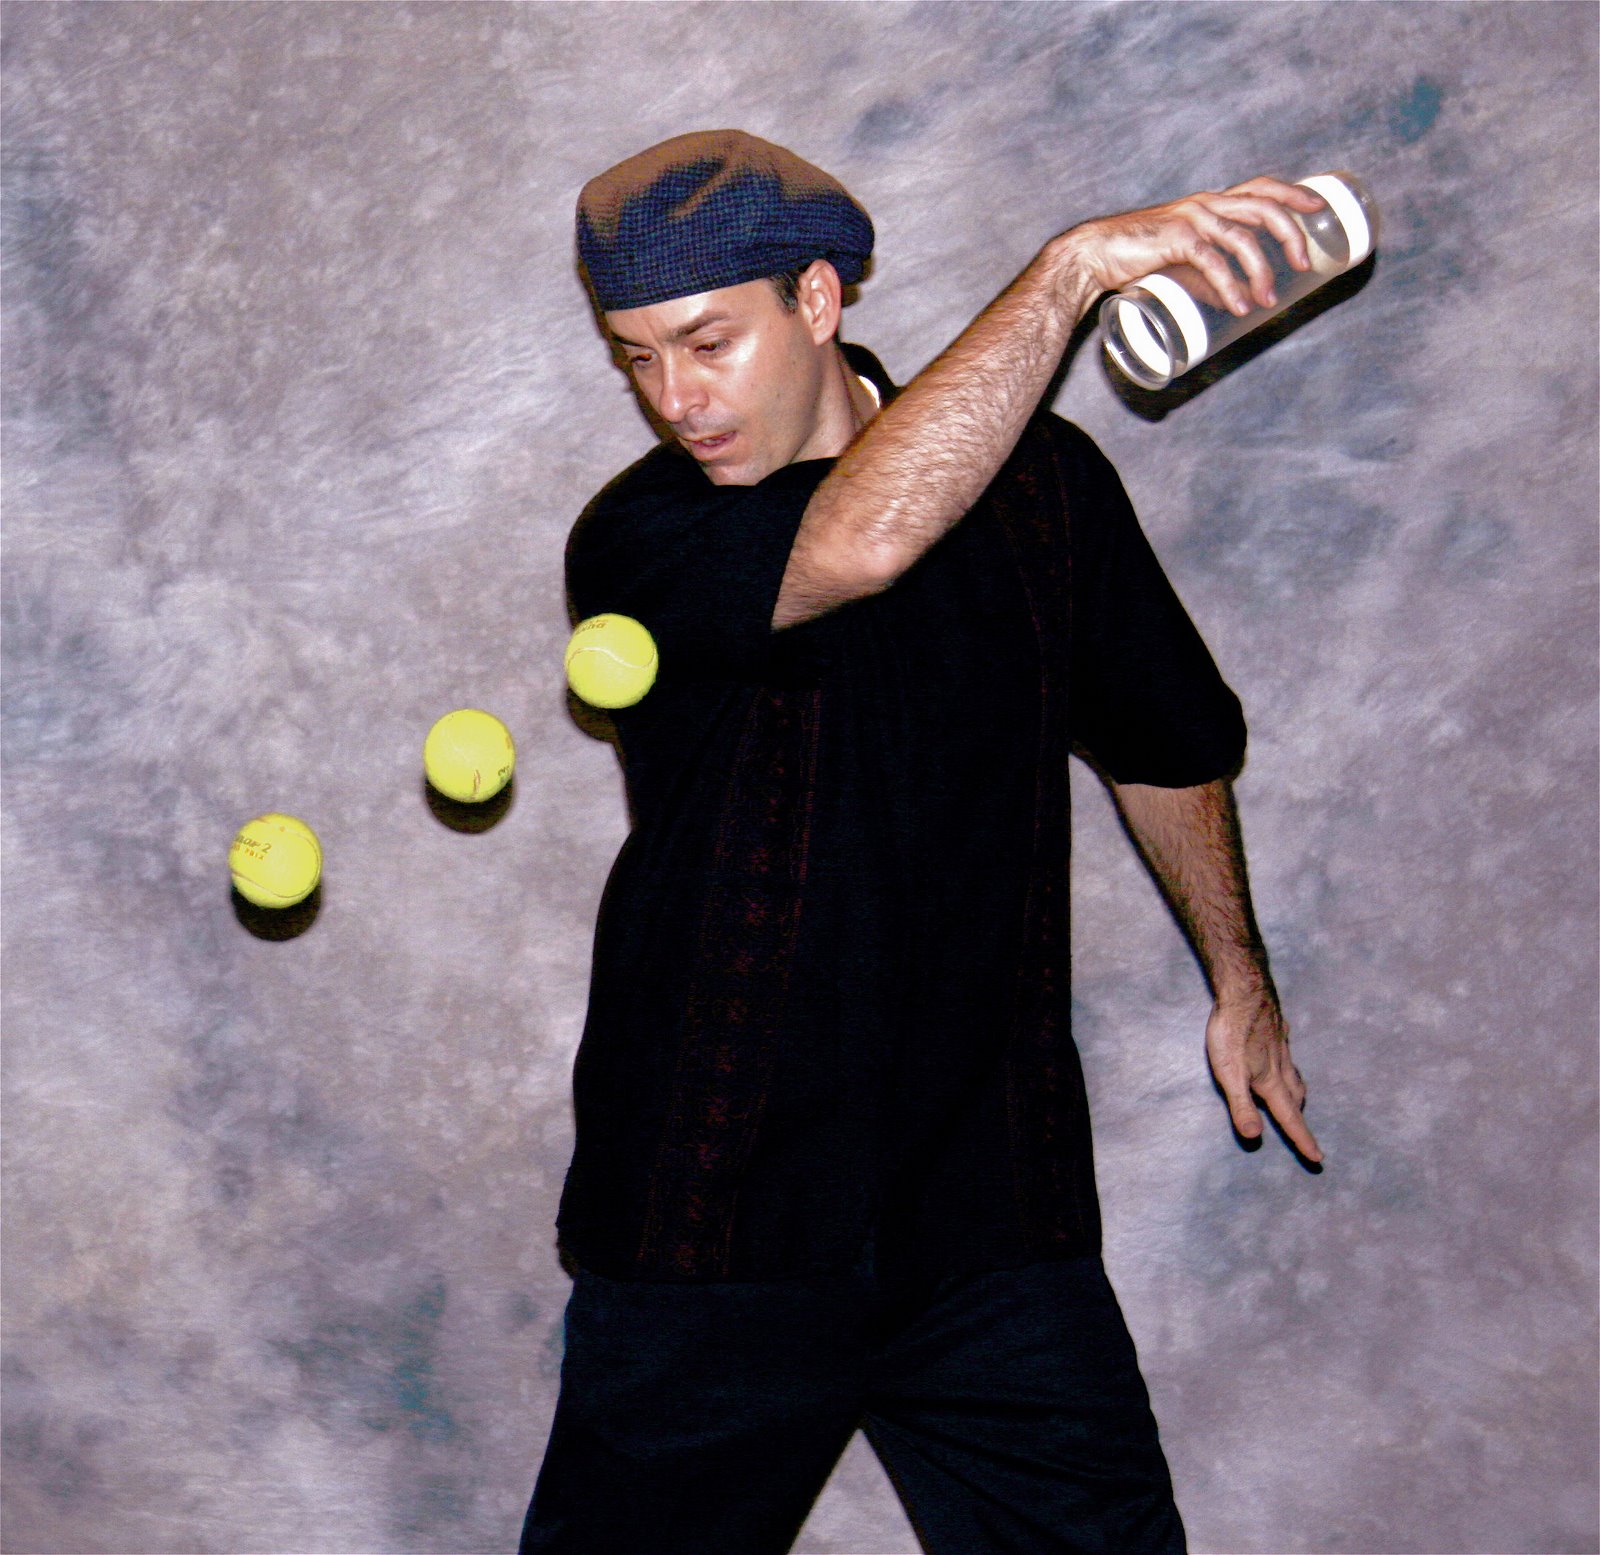 [Matt+Hall+Tennis+Ball+and+Can+Photo.htm]